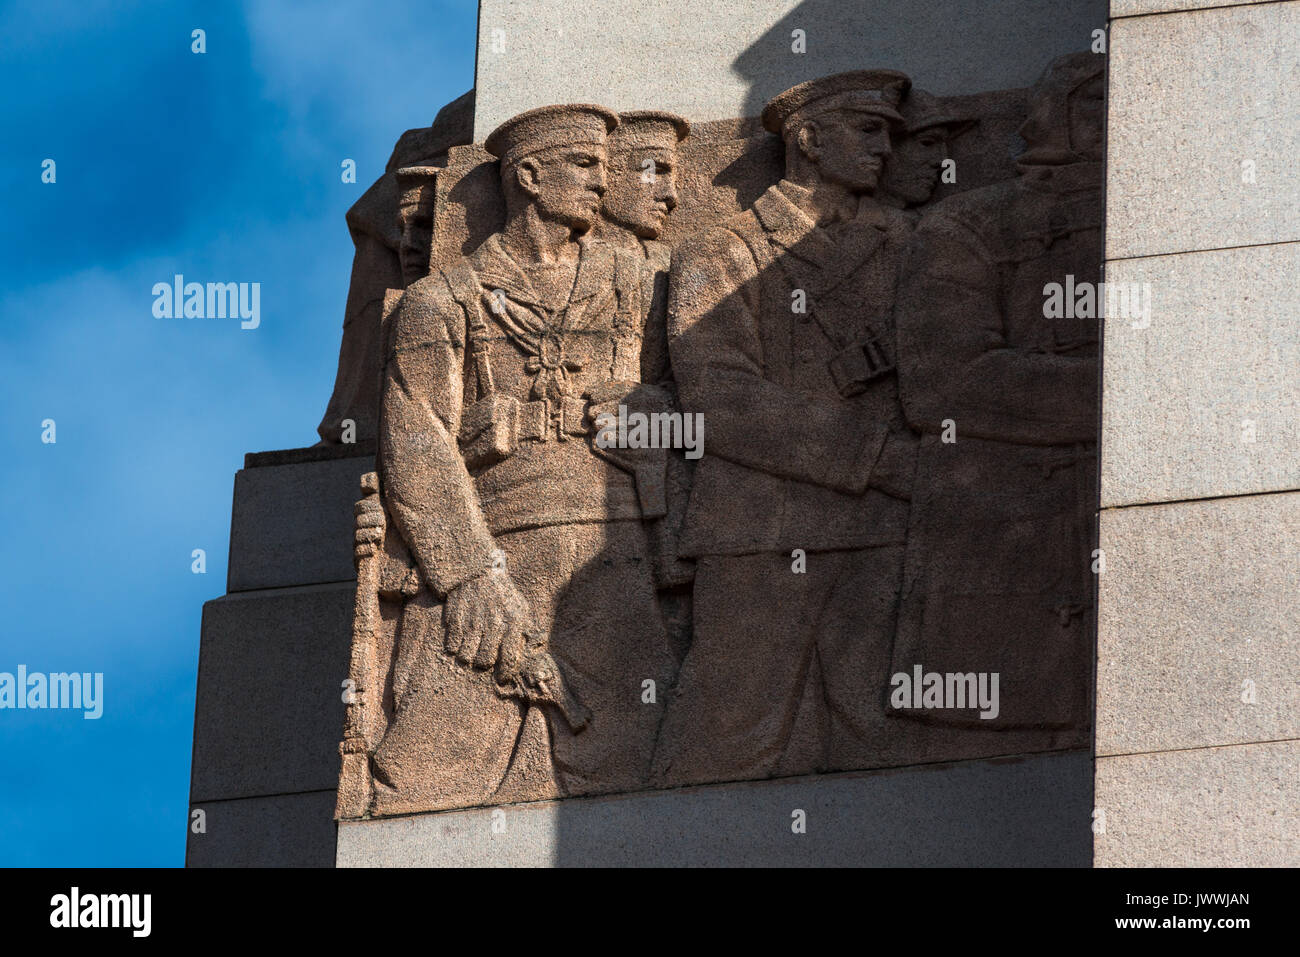 ANZAC - Australian and New Zealand Army Corps, memorial monument à Hyde Park, Sydney, Australie Banque D'Images